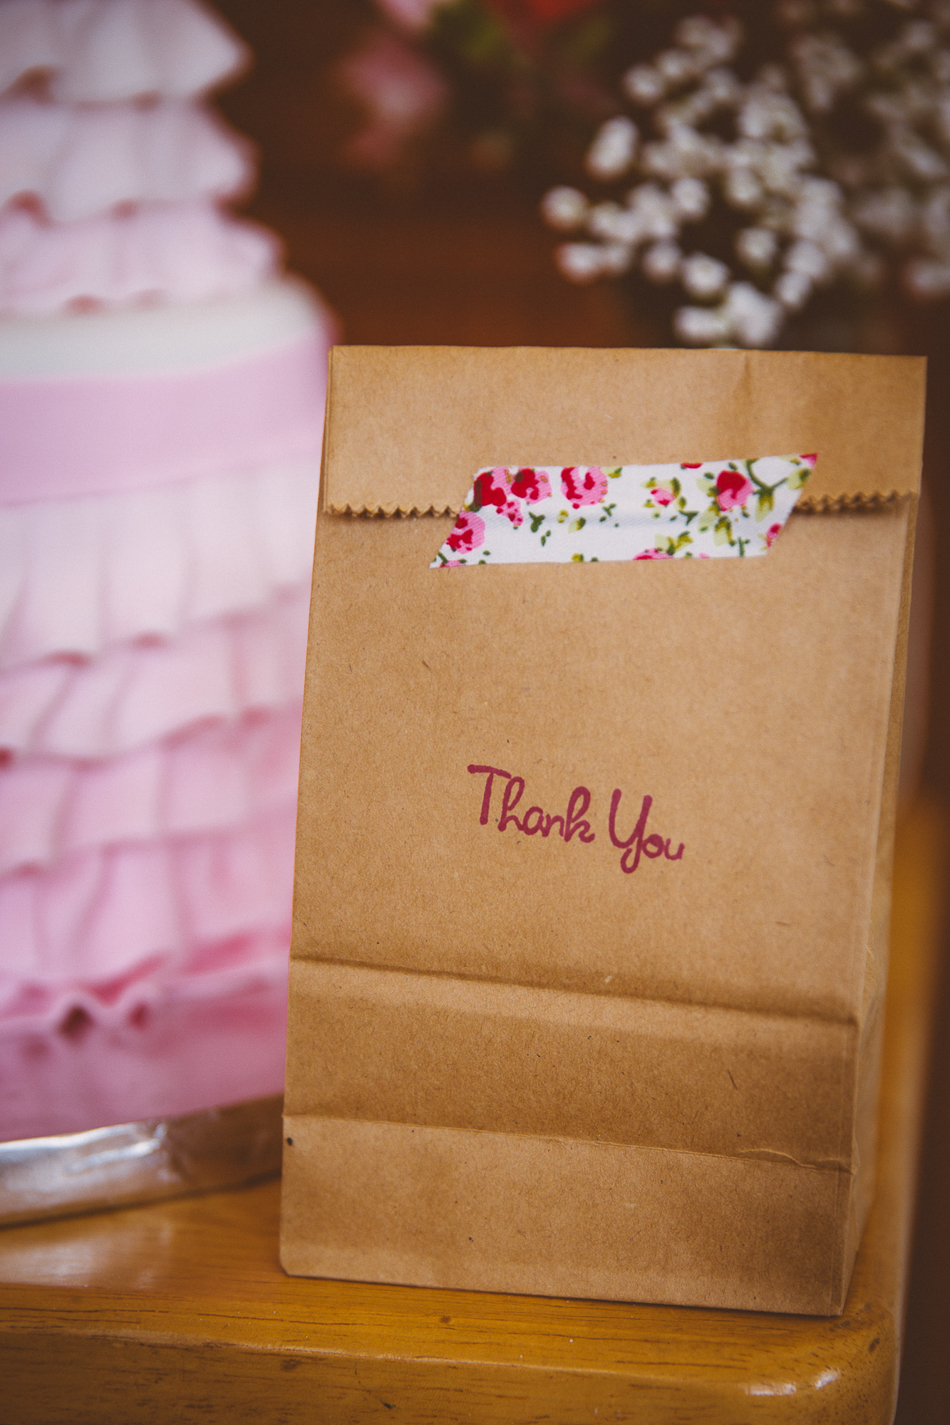 pink ombre cake / livelovesimple.com